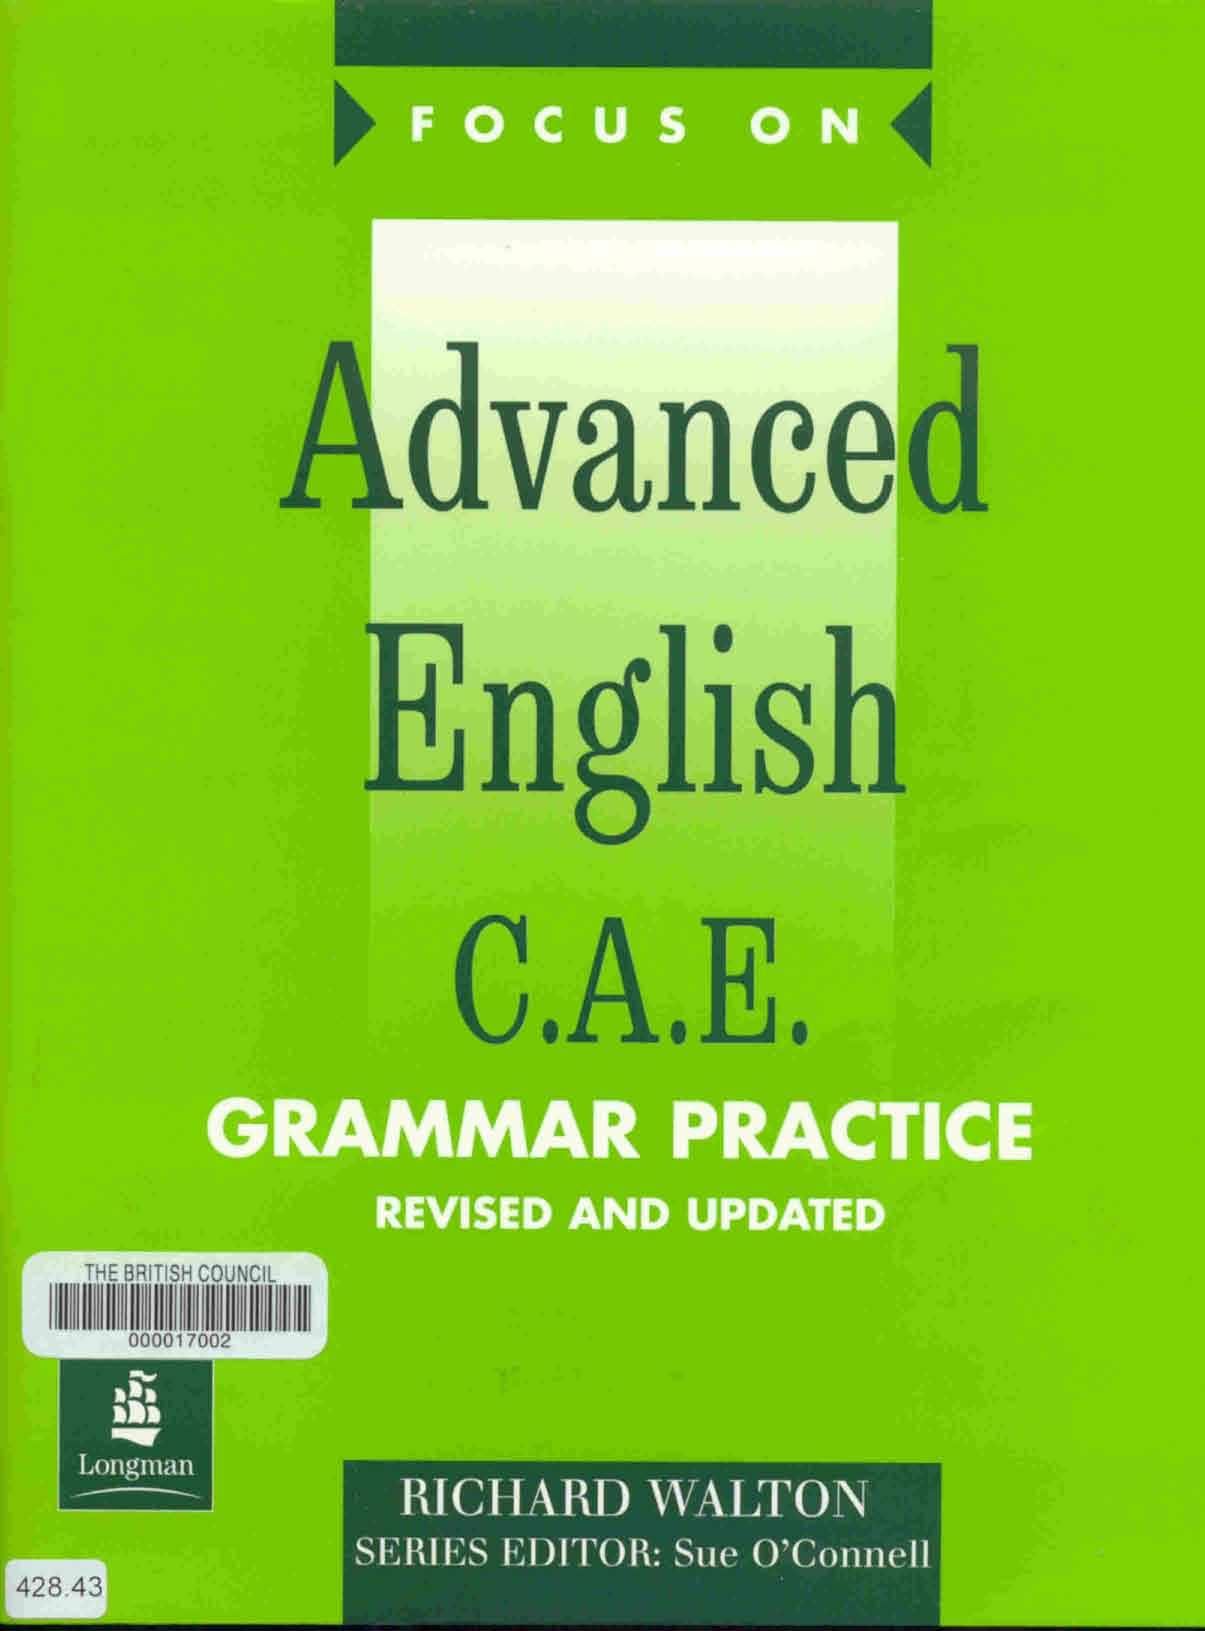 Focus_On_Advanced_English_Grammar_Practice